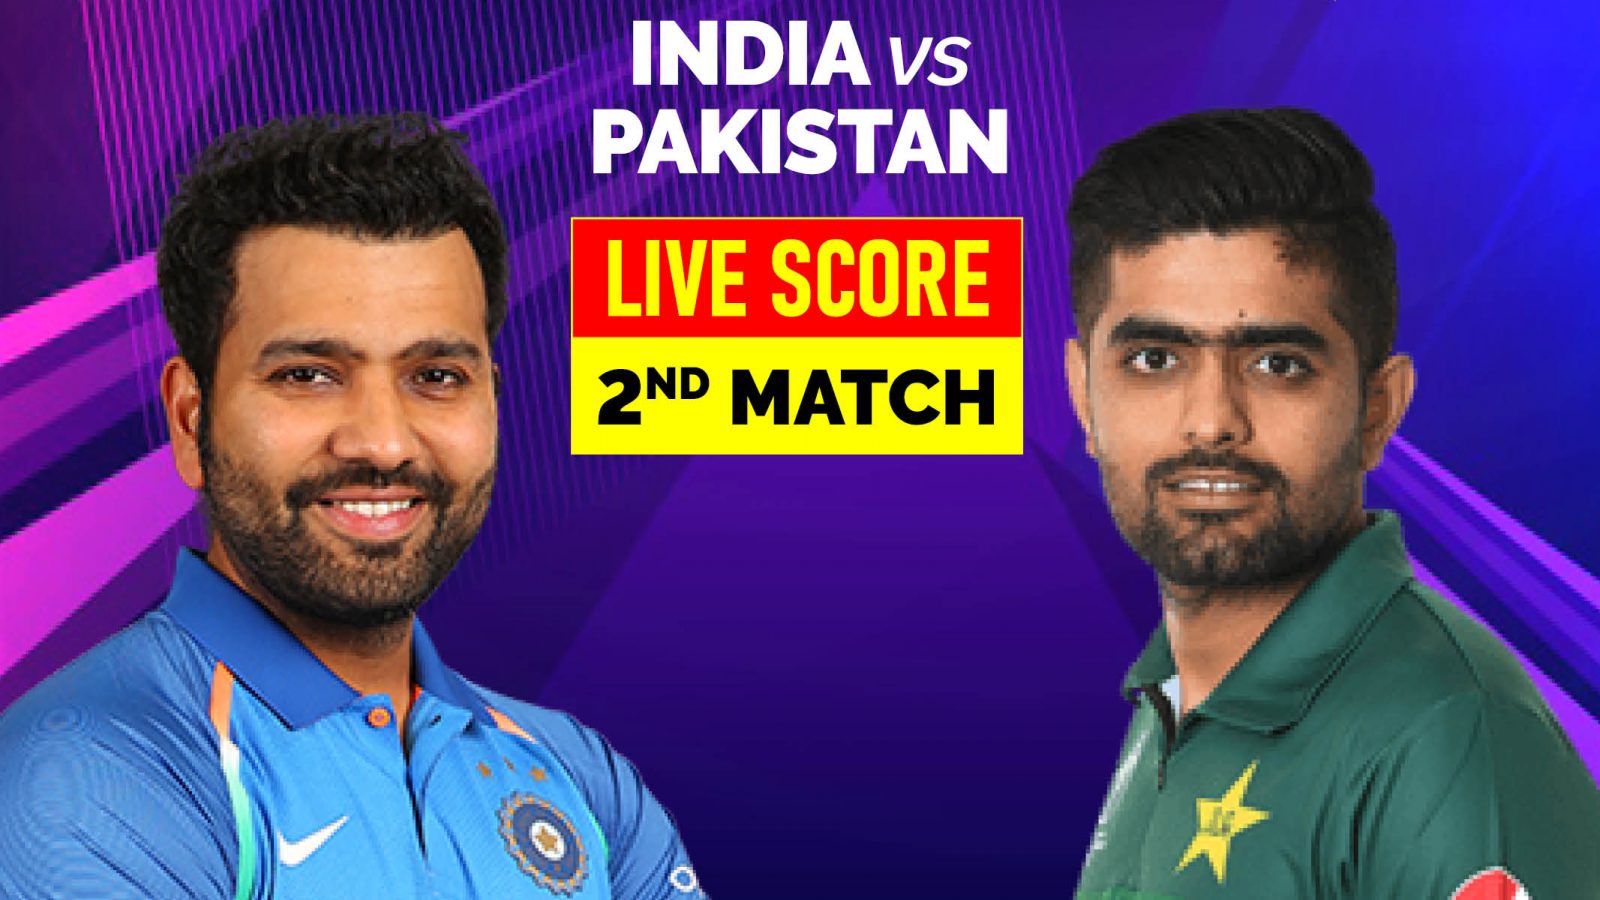 india pak live match today